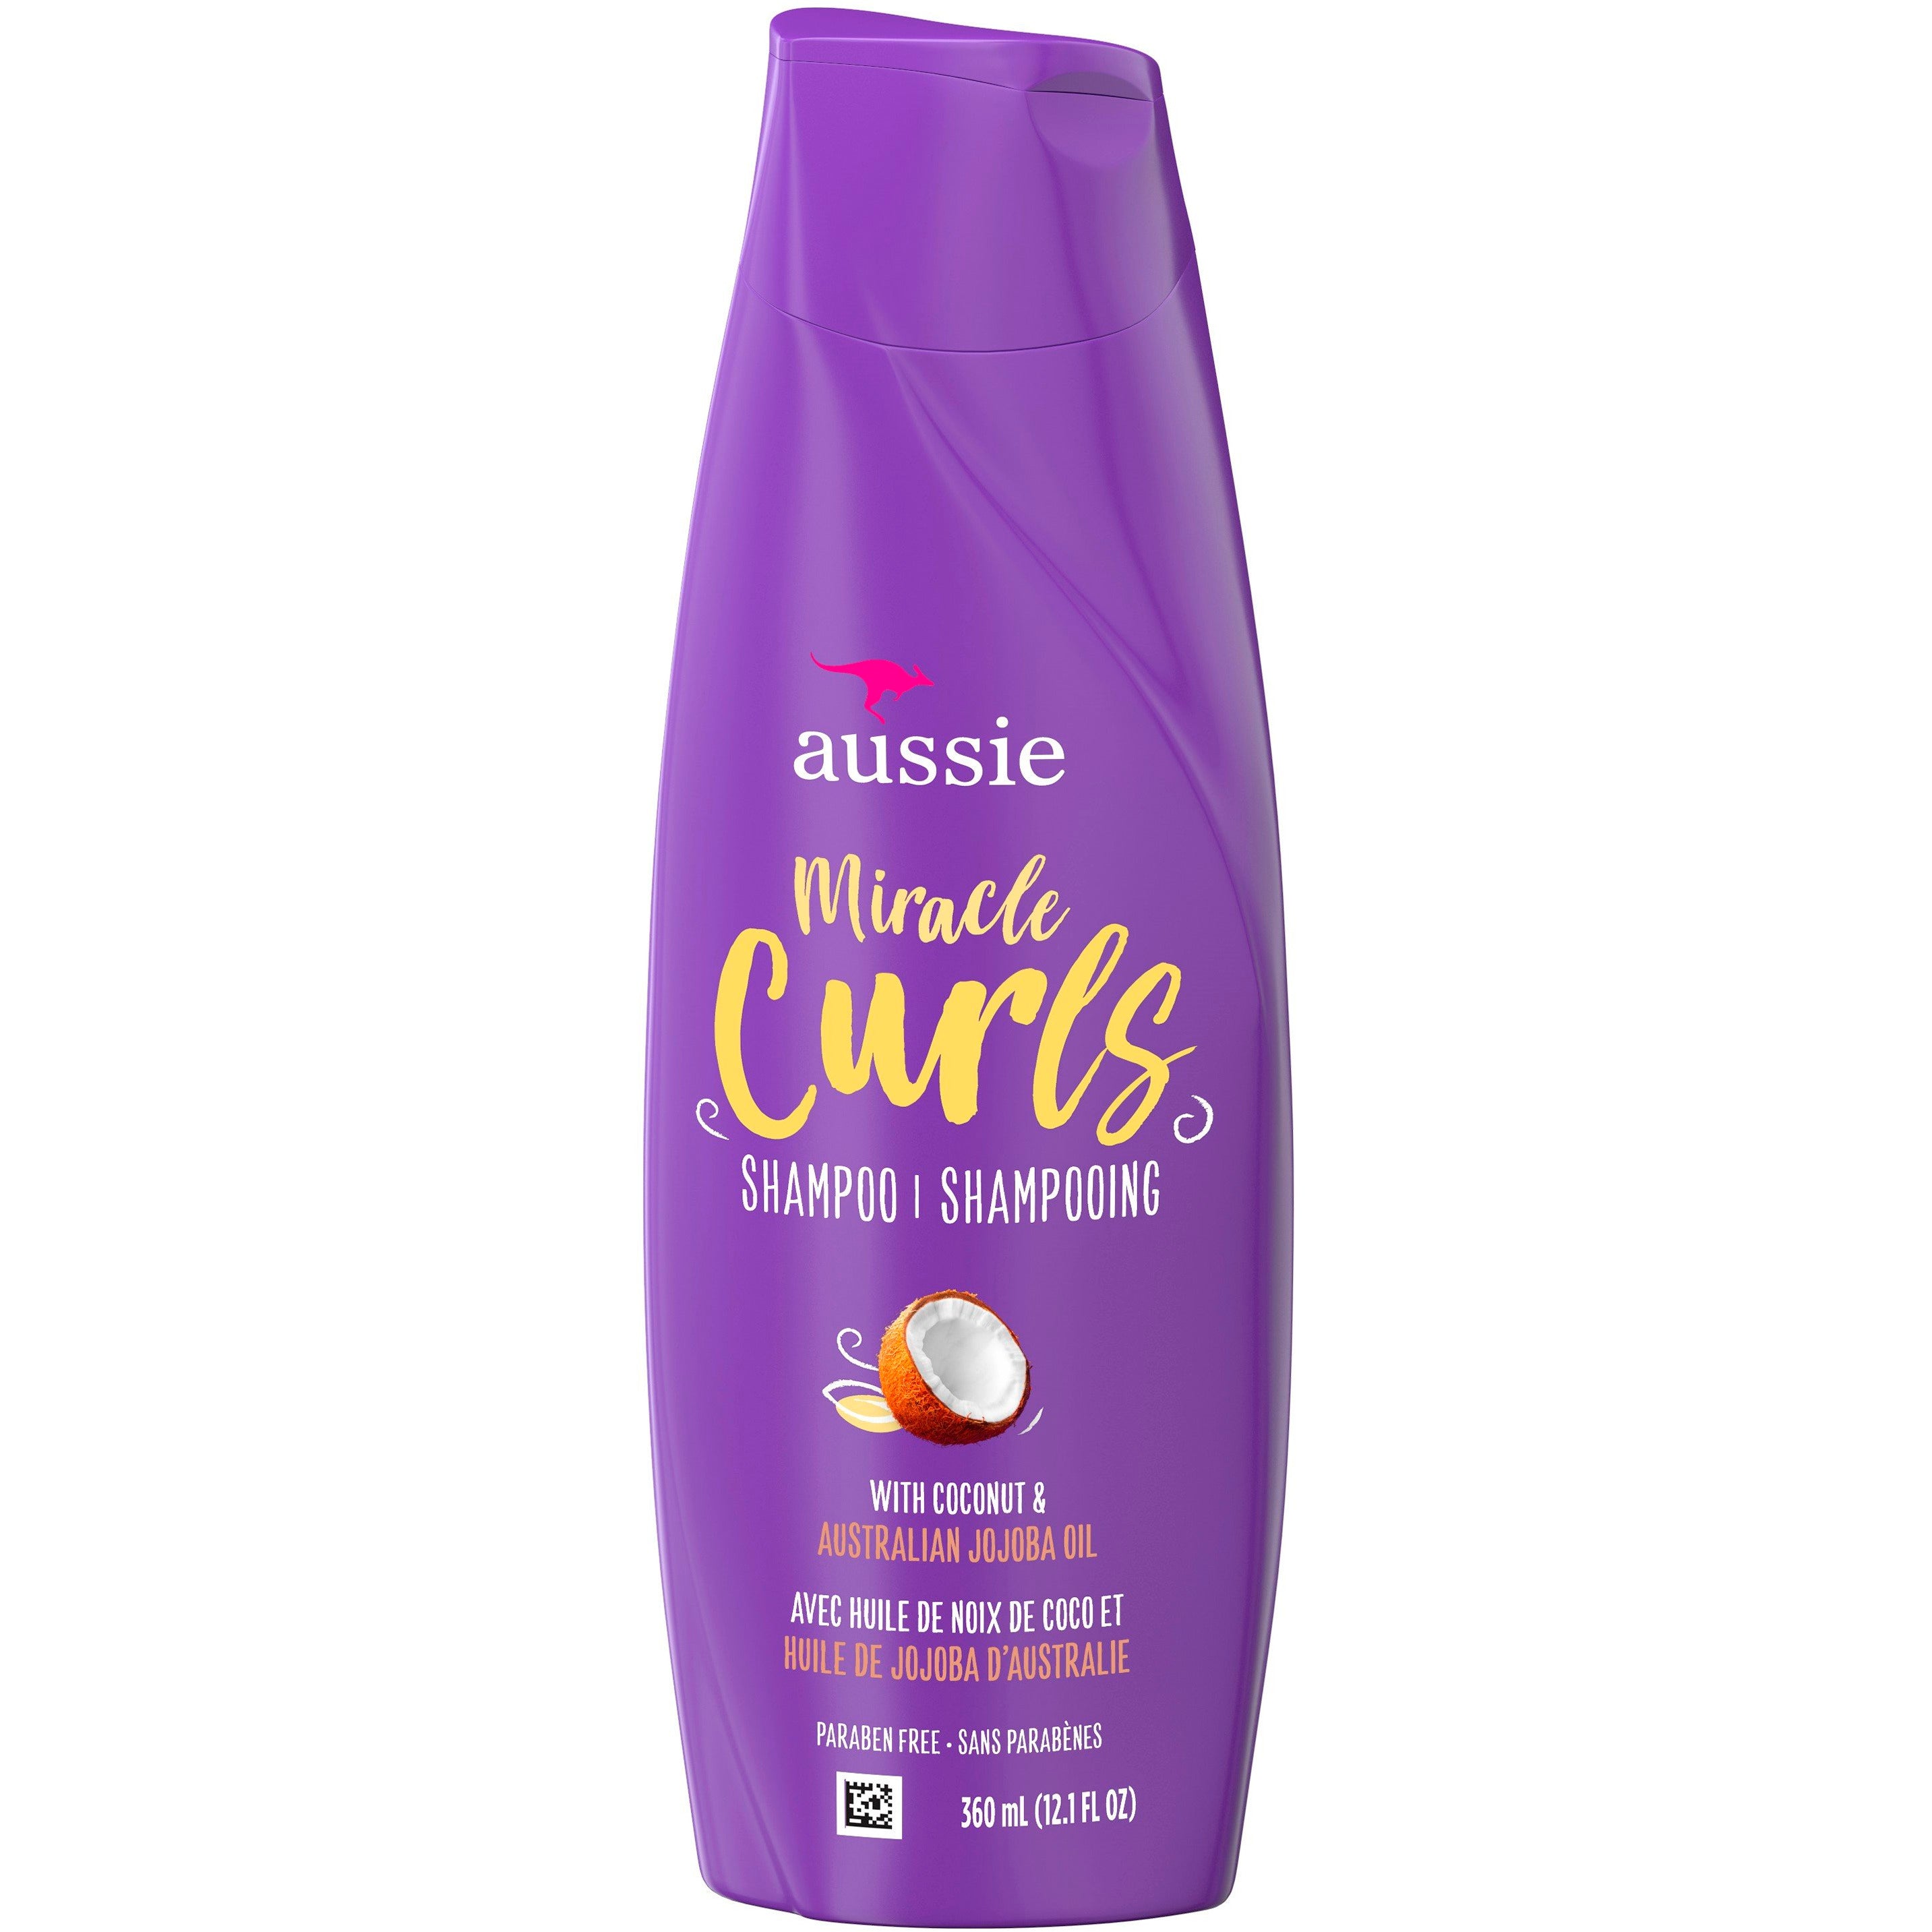 Aussie Miracle Curls Shampoo 12.1 oz - 4th Ave Market